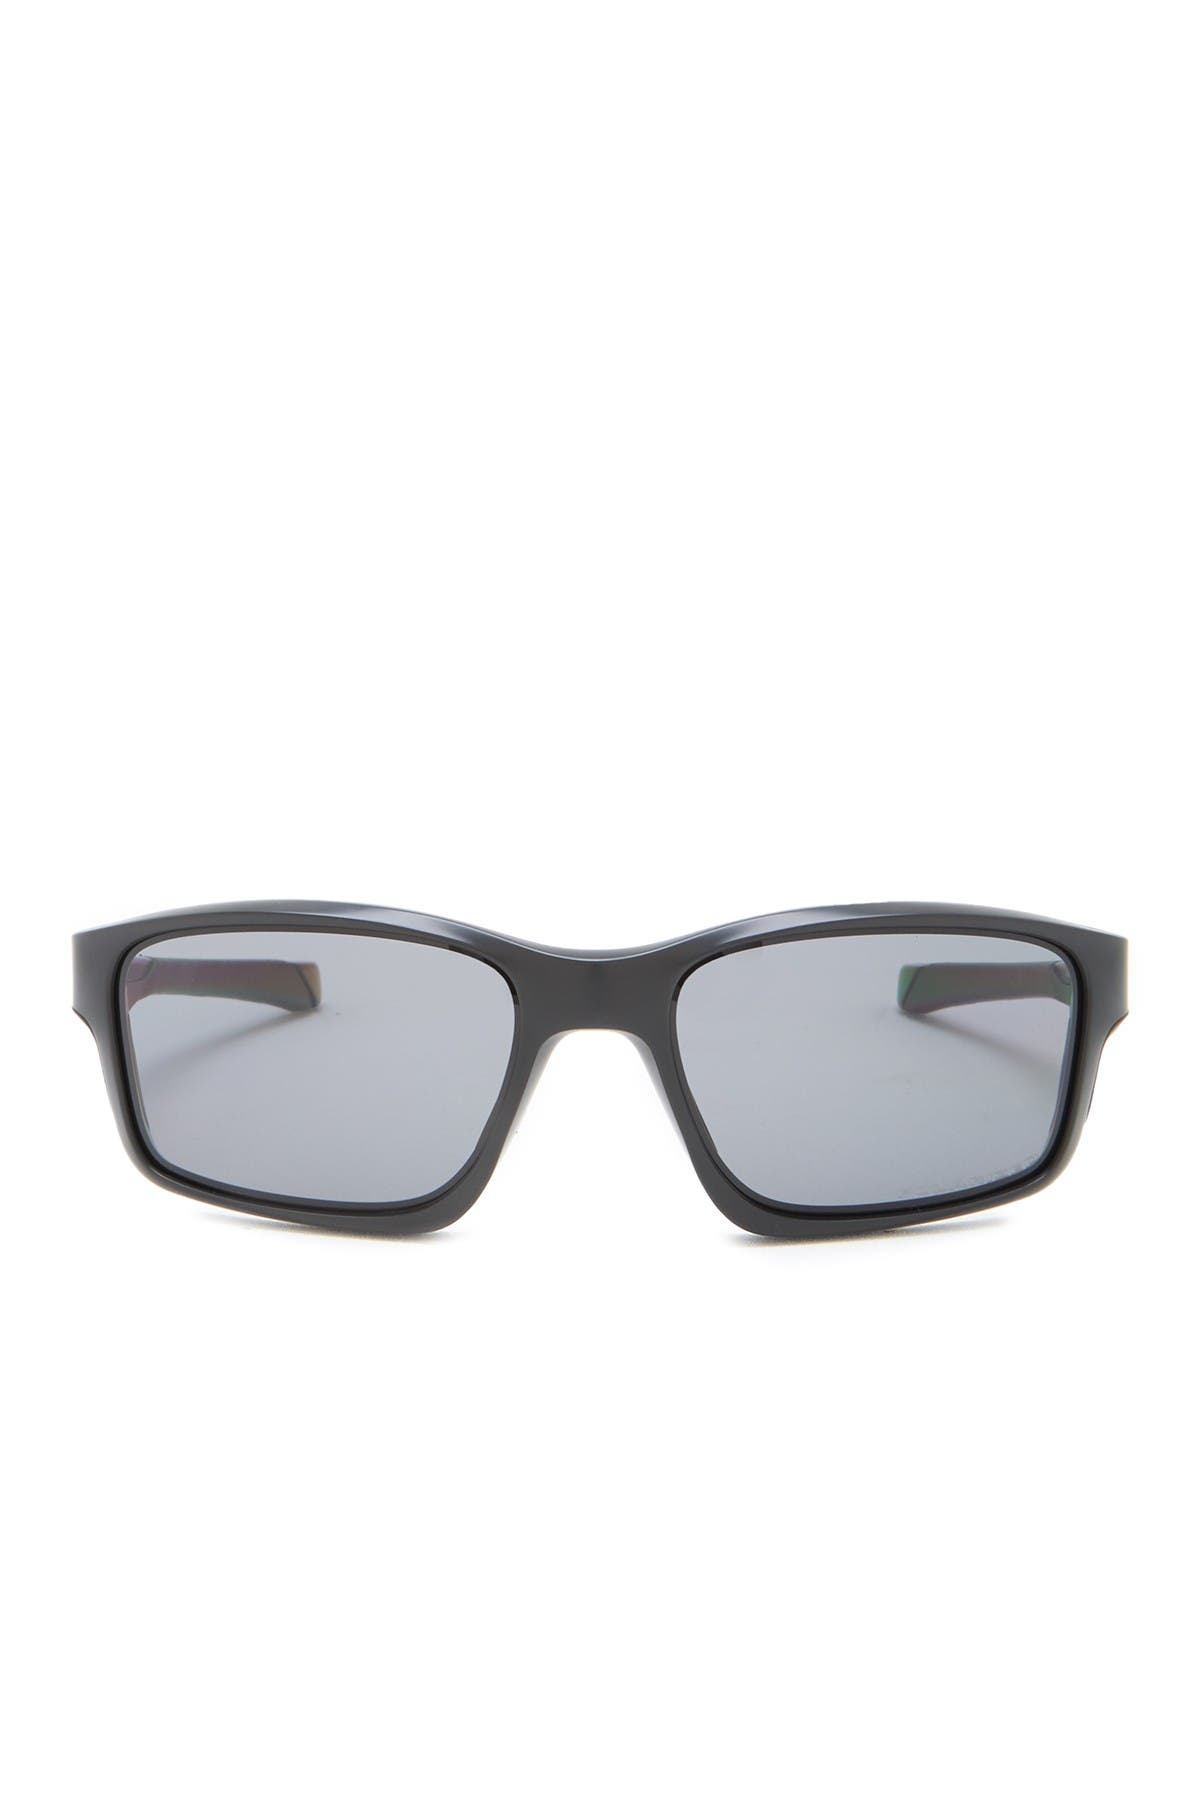 Oakley | Chainlink 57mm Sunglasses 